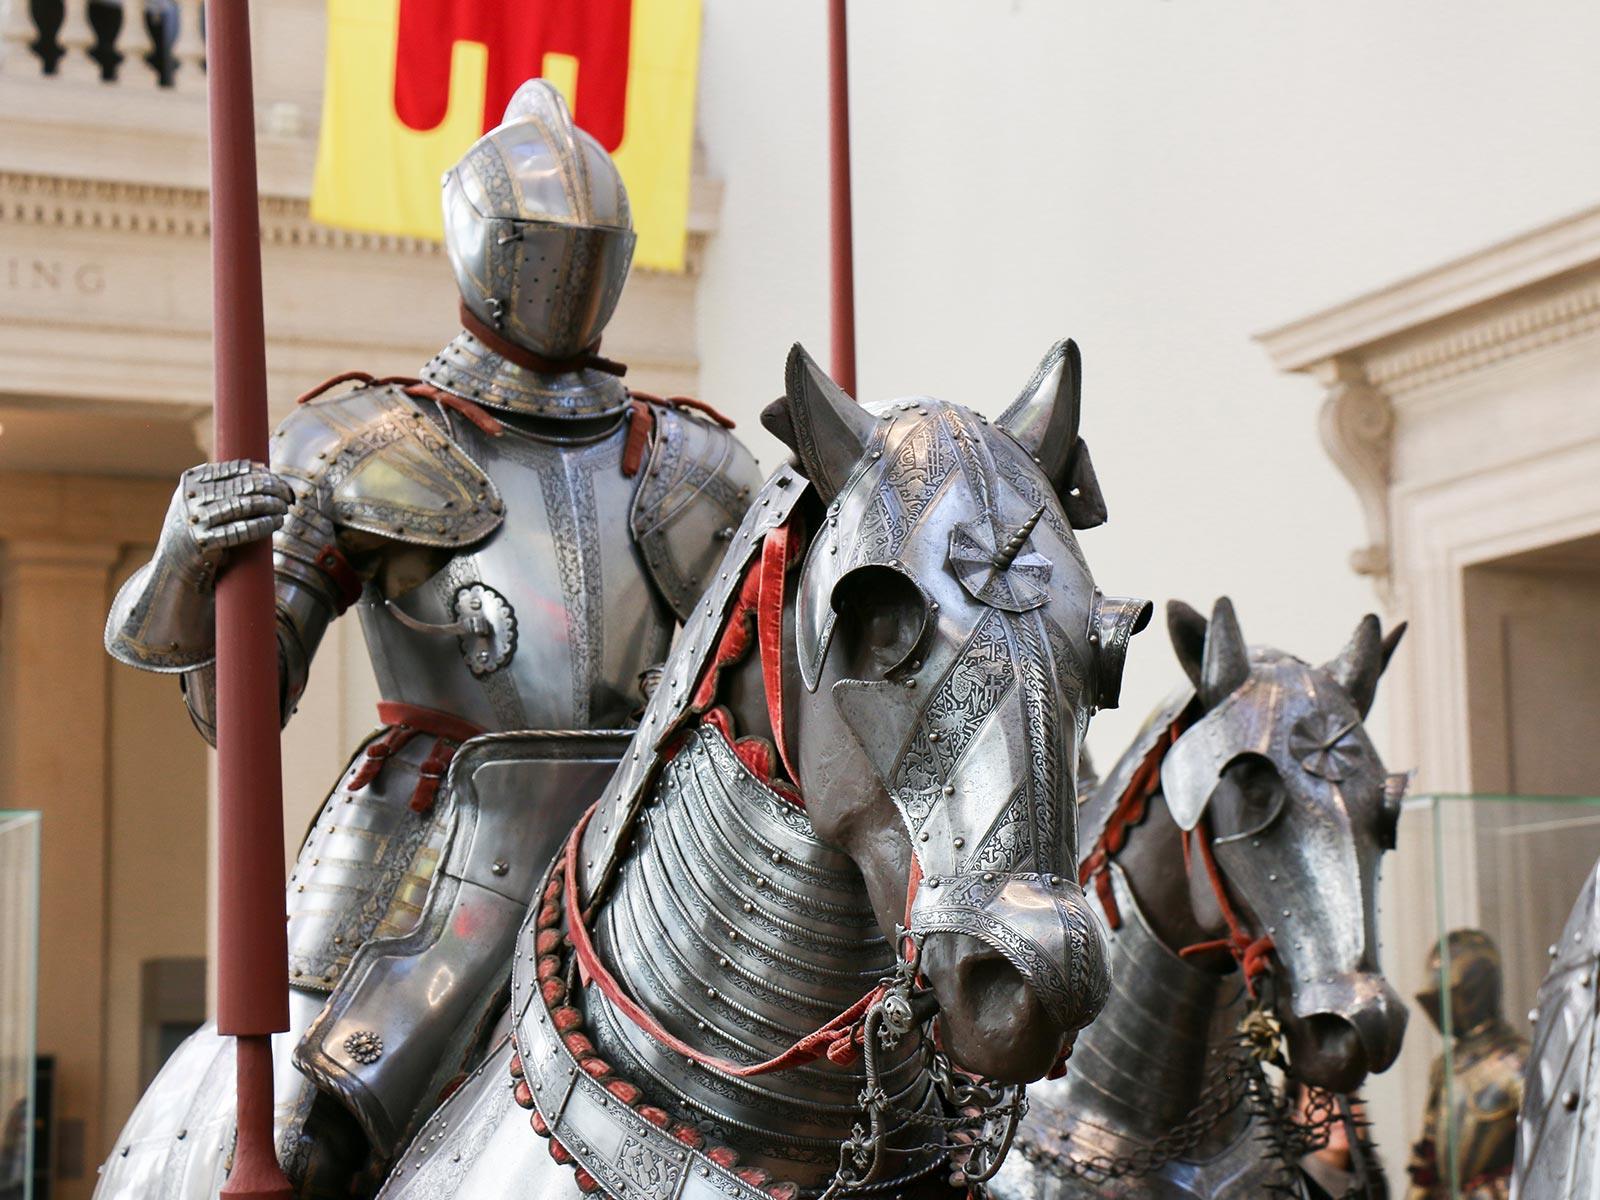 Armure médiévale, Musée MET, New York, États-Unis / Medieval armor, The Metropolitan Museum of Art, NY, NYC, USA